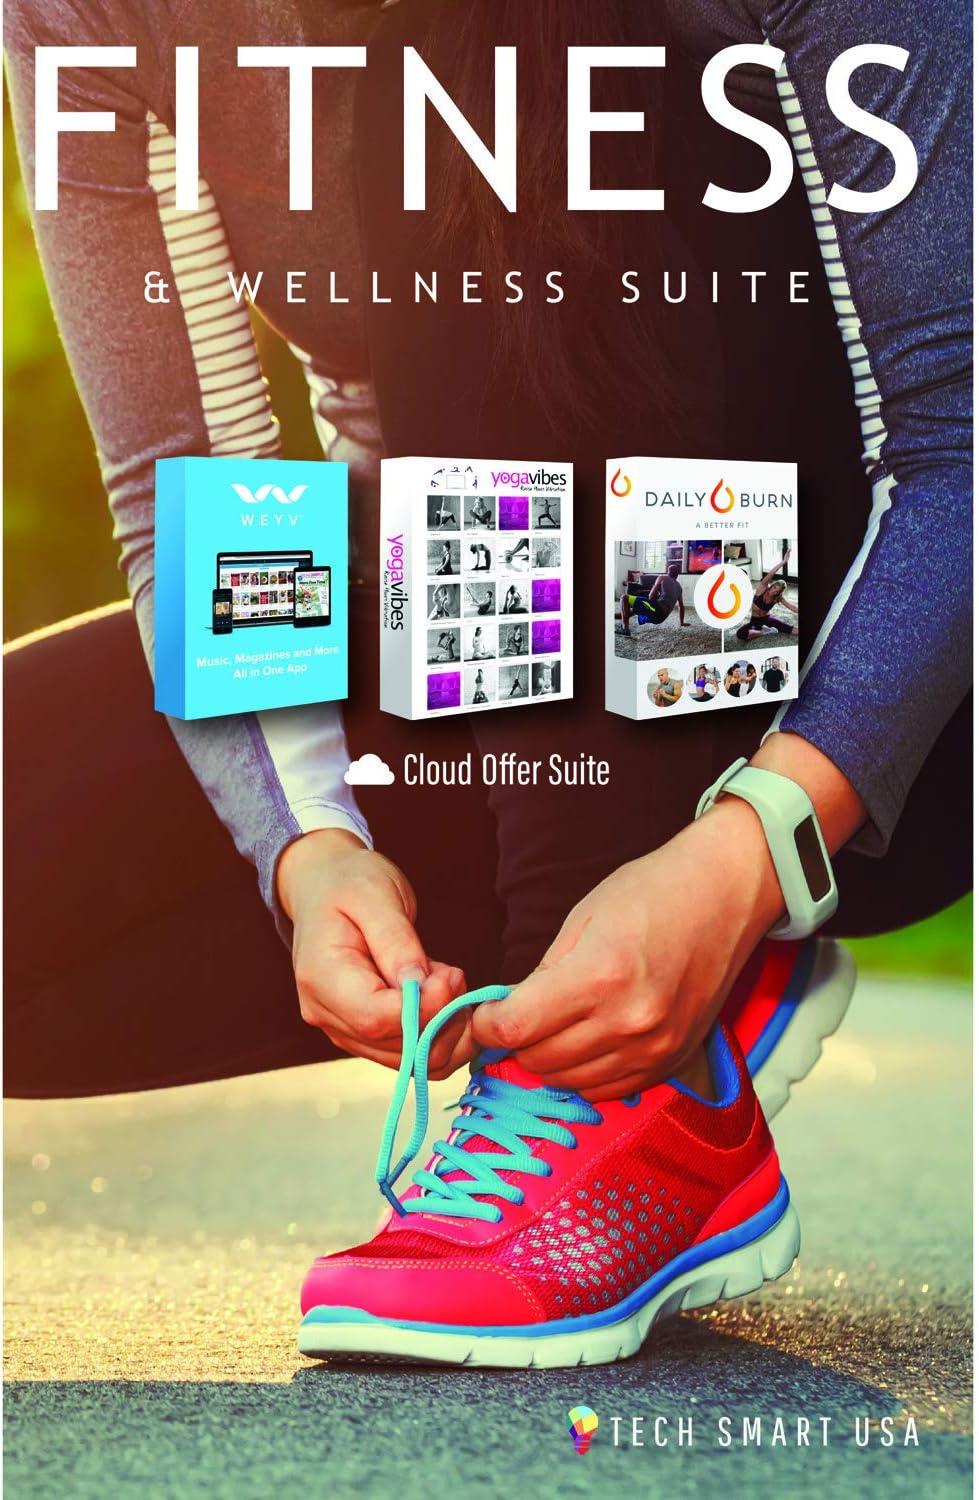 Garmin Forerunner 45S GPS Heart Rate Monitor Running Smartwatch - (Renewed)  Bundle with Fitness & Wellness Suite (WEYV, Yoga Vibes, Daily Burn)